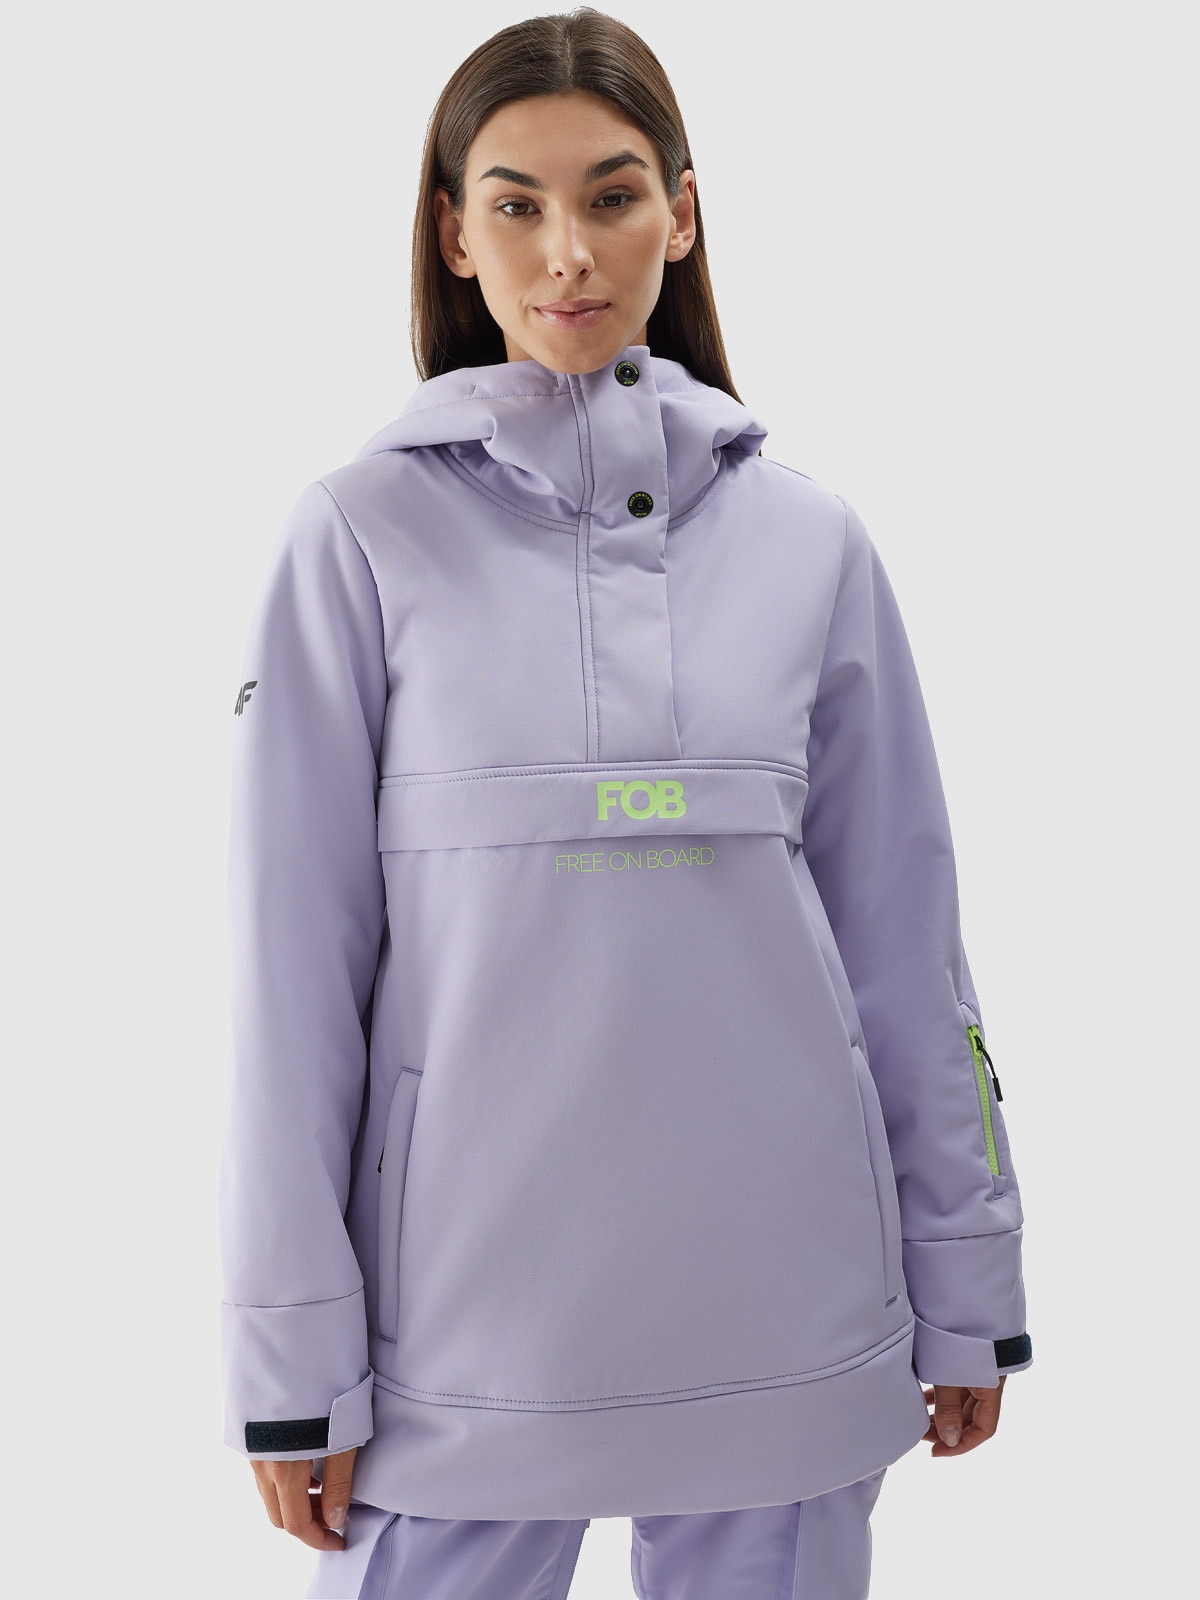 Dámska snowboardová softshellová bunda s membránou 5000 - fialová